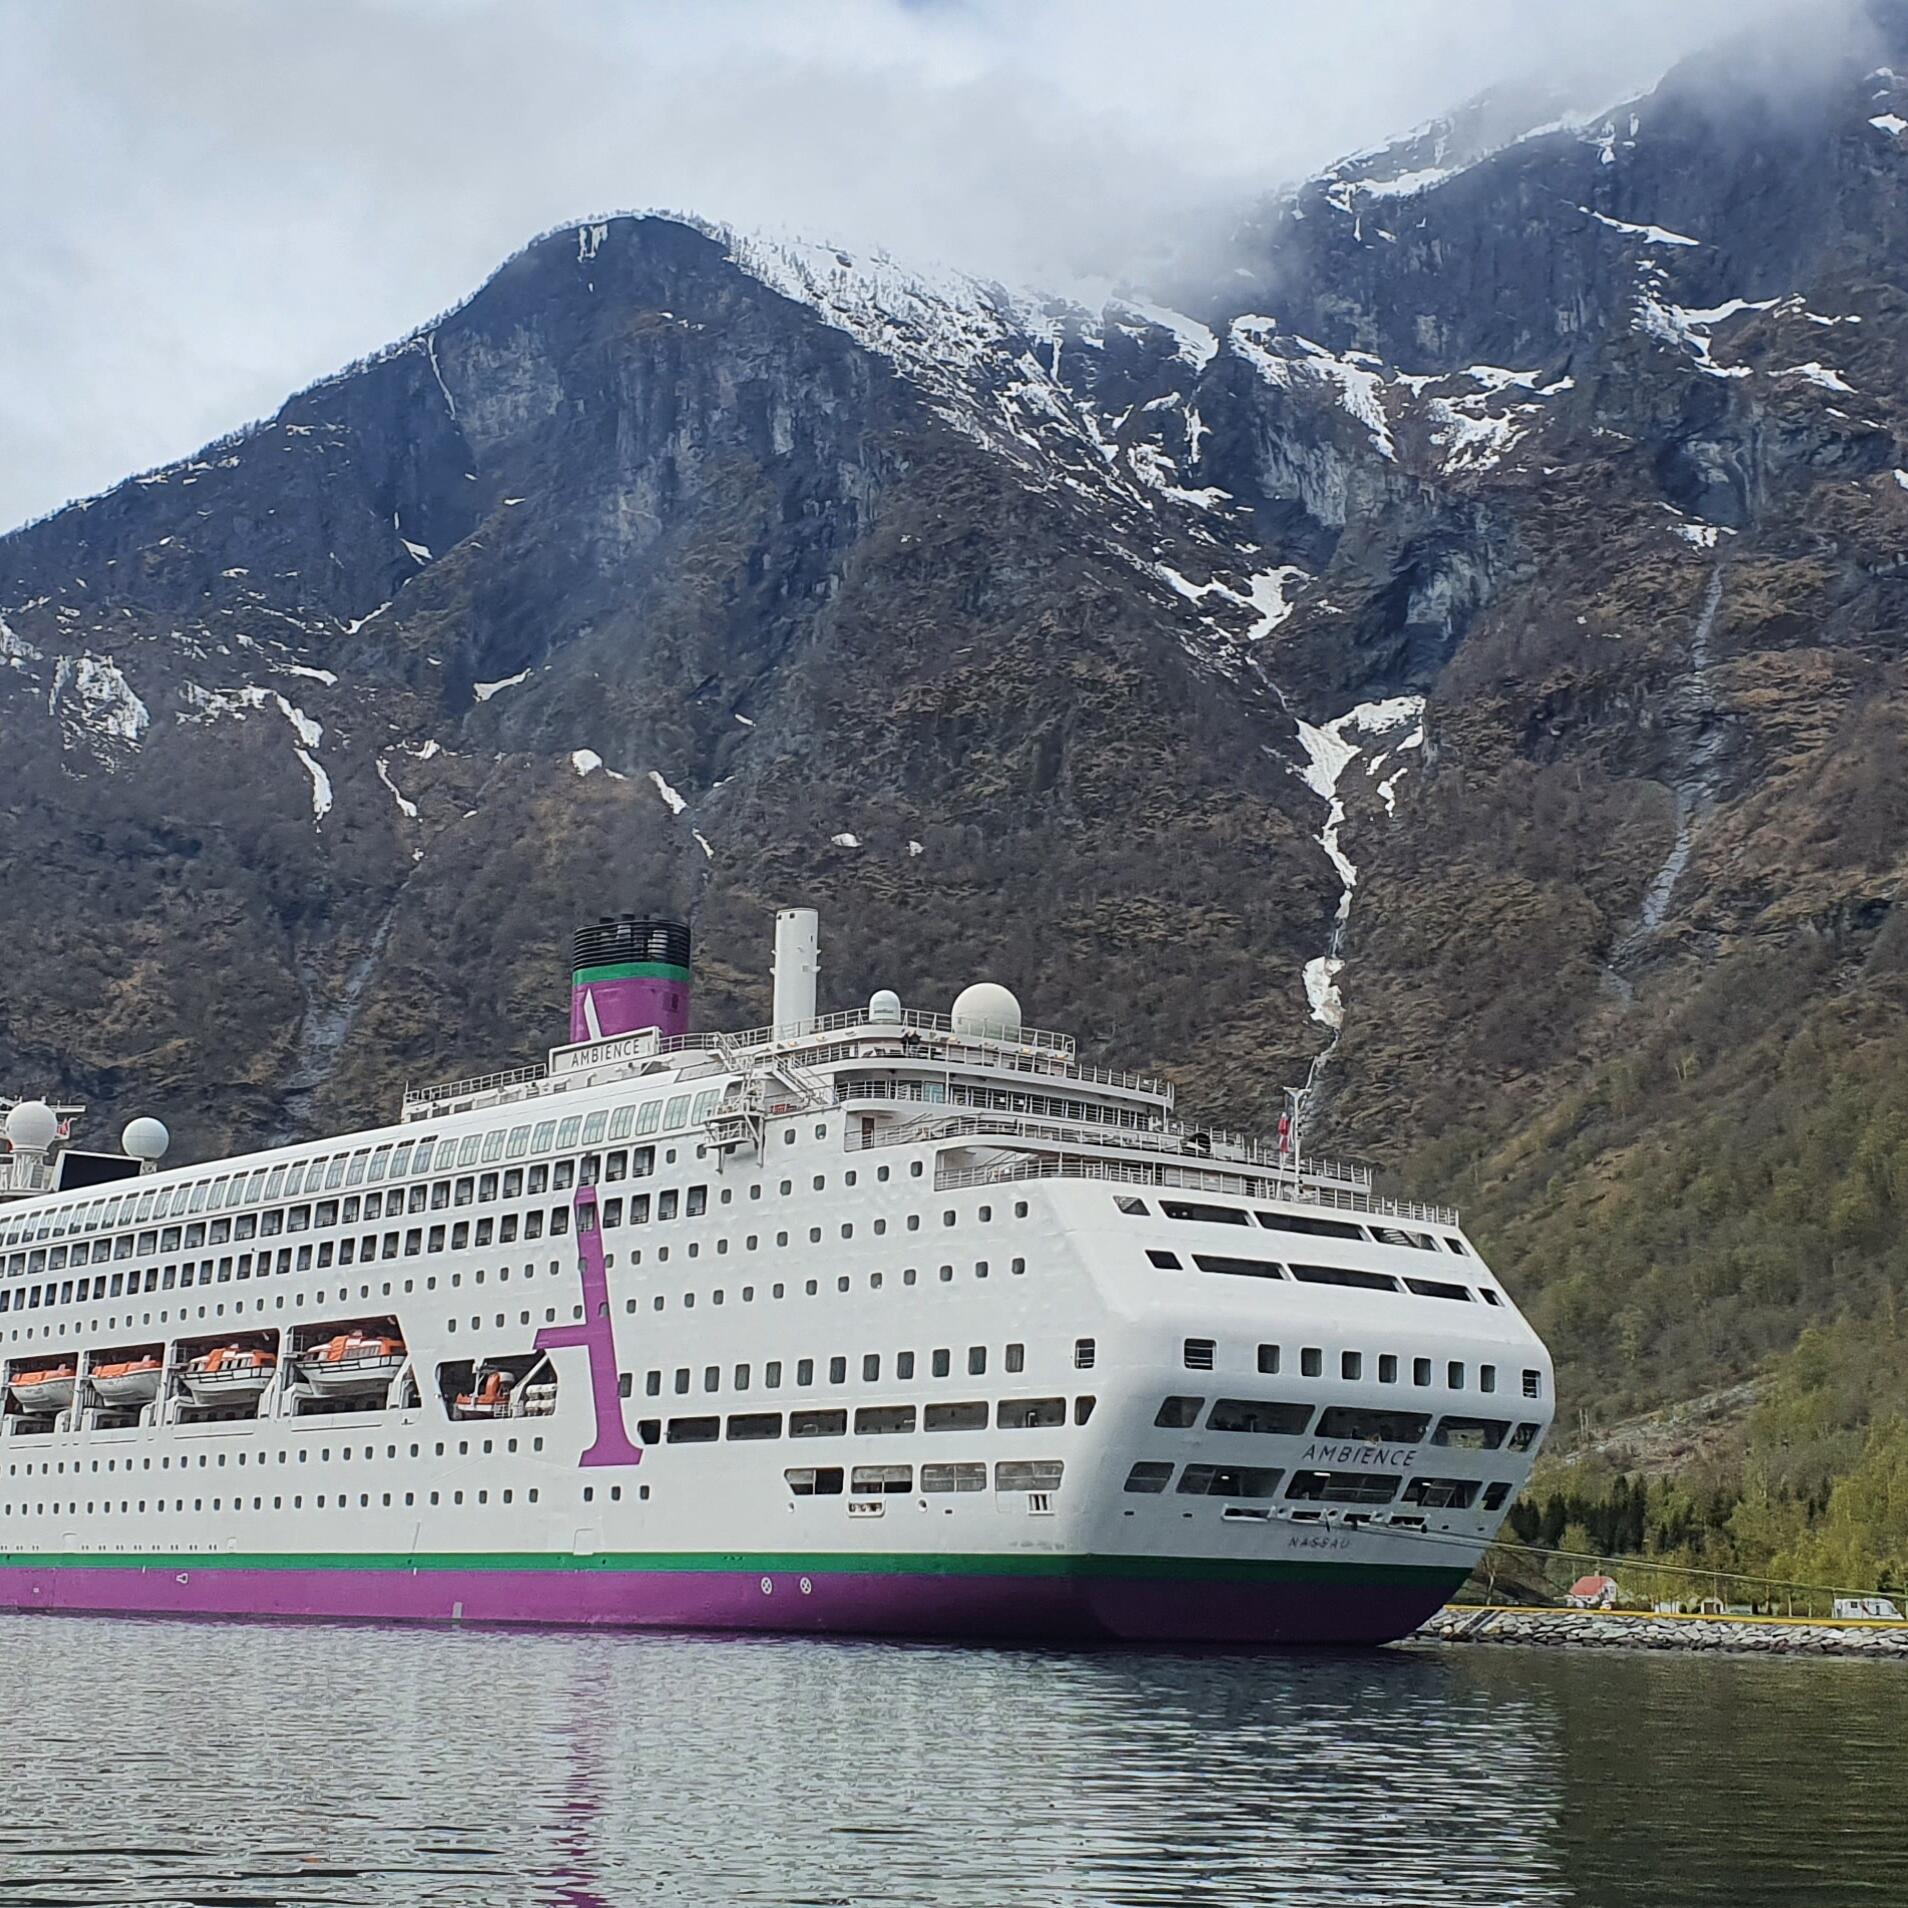 Ambassador Cruise Line's new ship sets sail